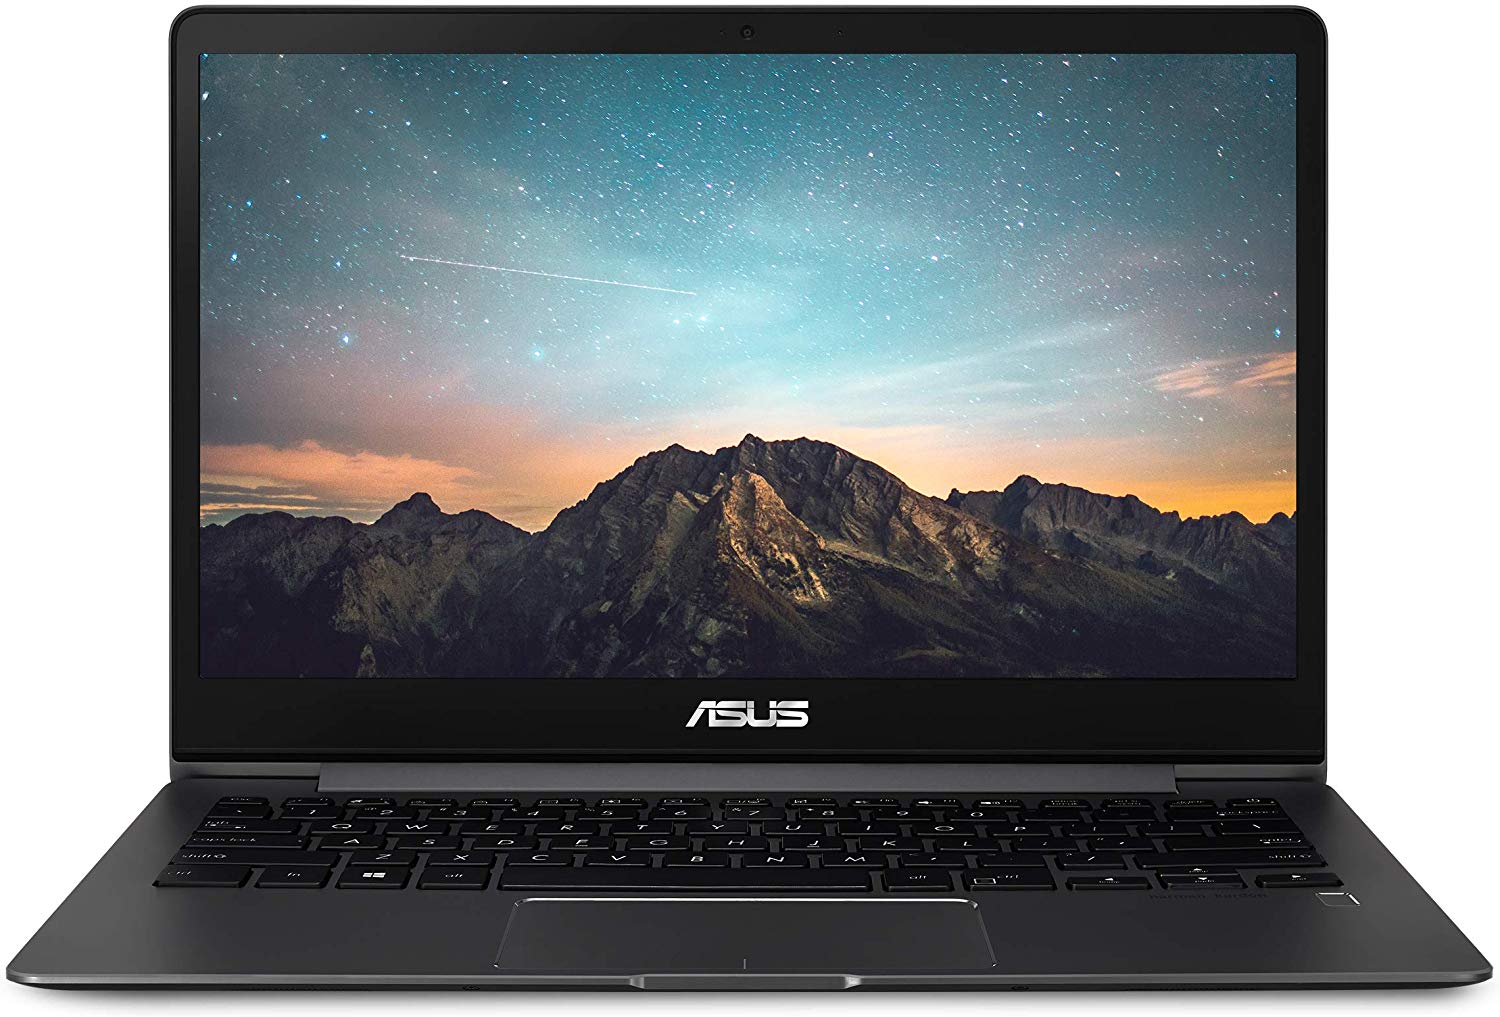 ASUS ZenBook 13 Laptop